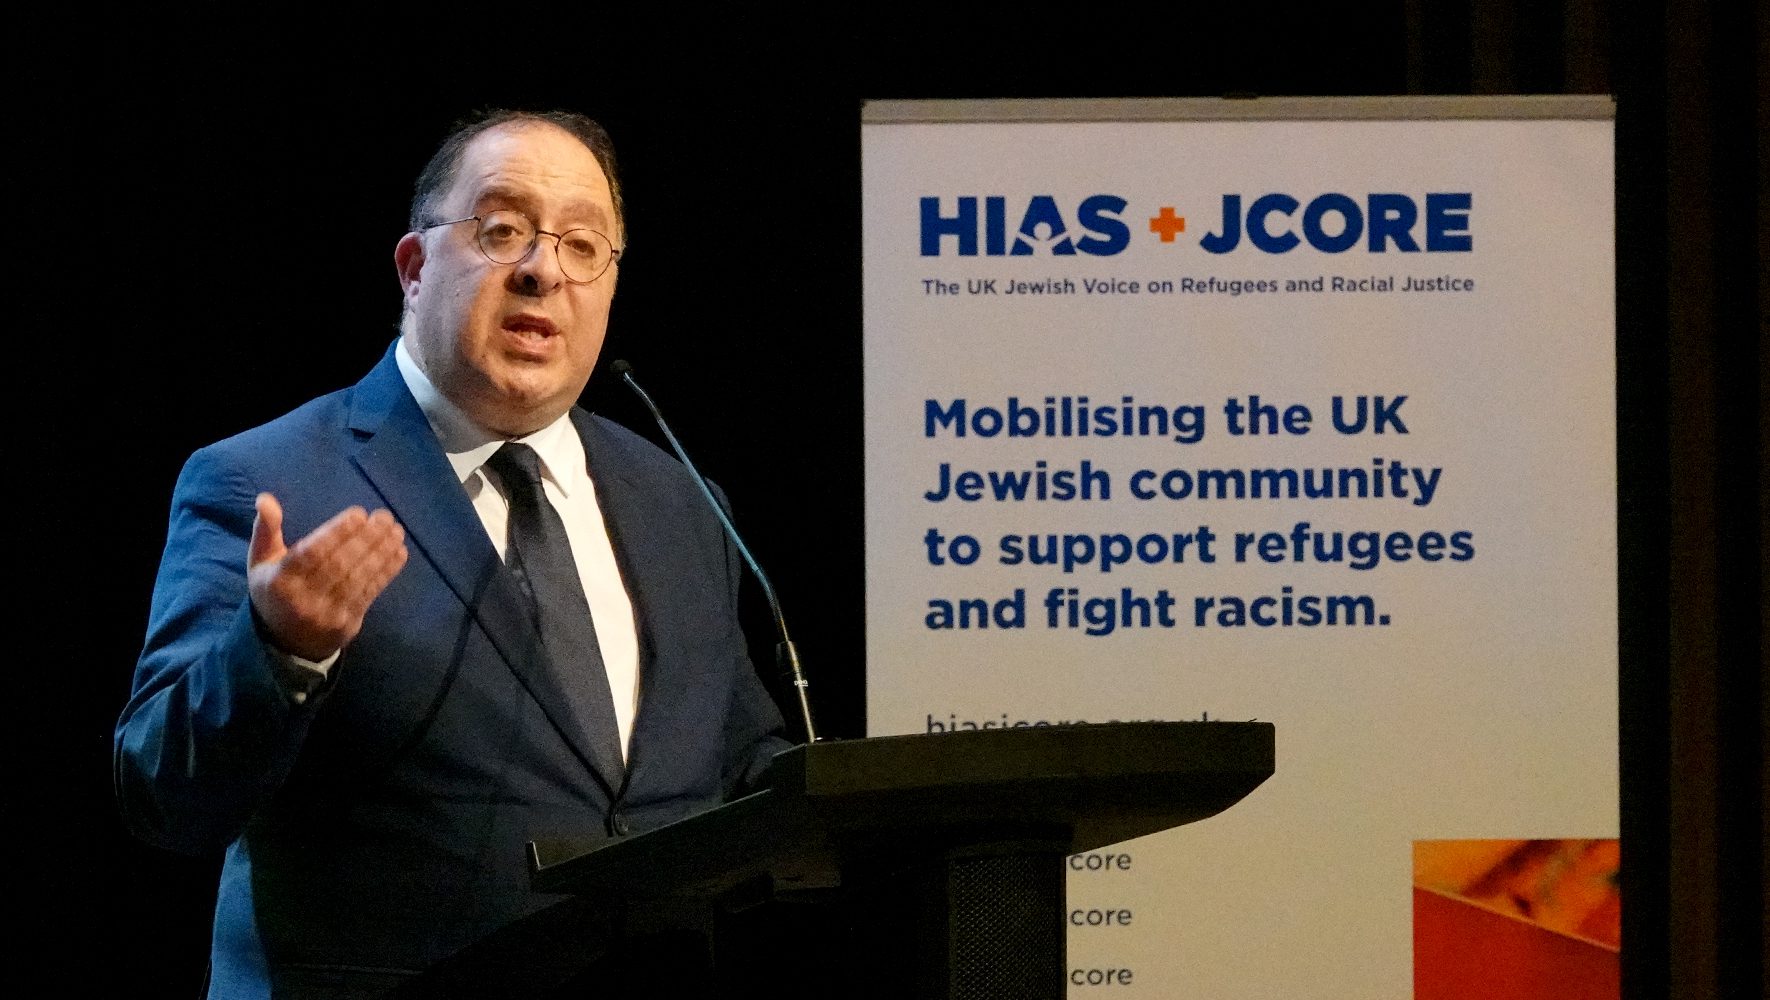 London Community Gathers to Celebrate HIAS+JCORE Launch